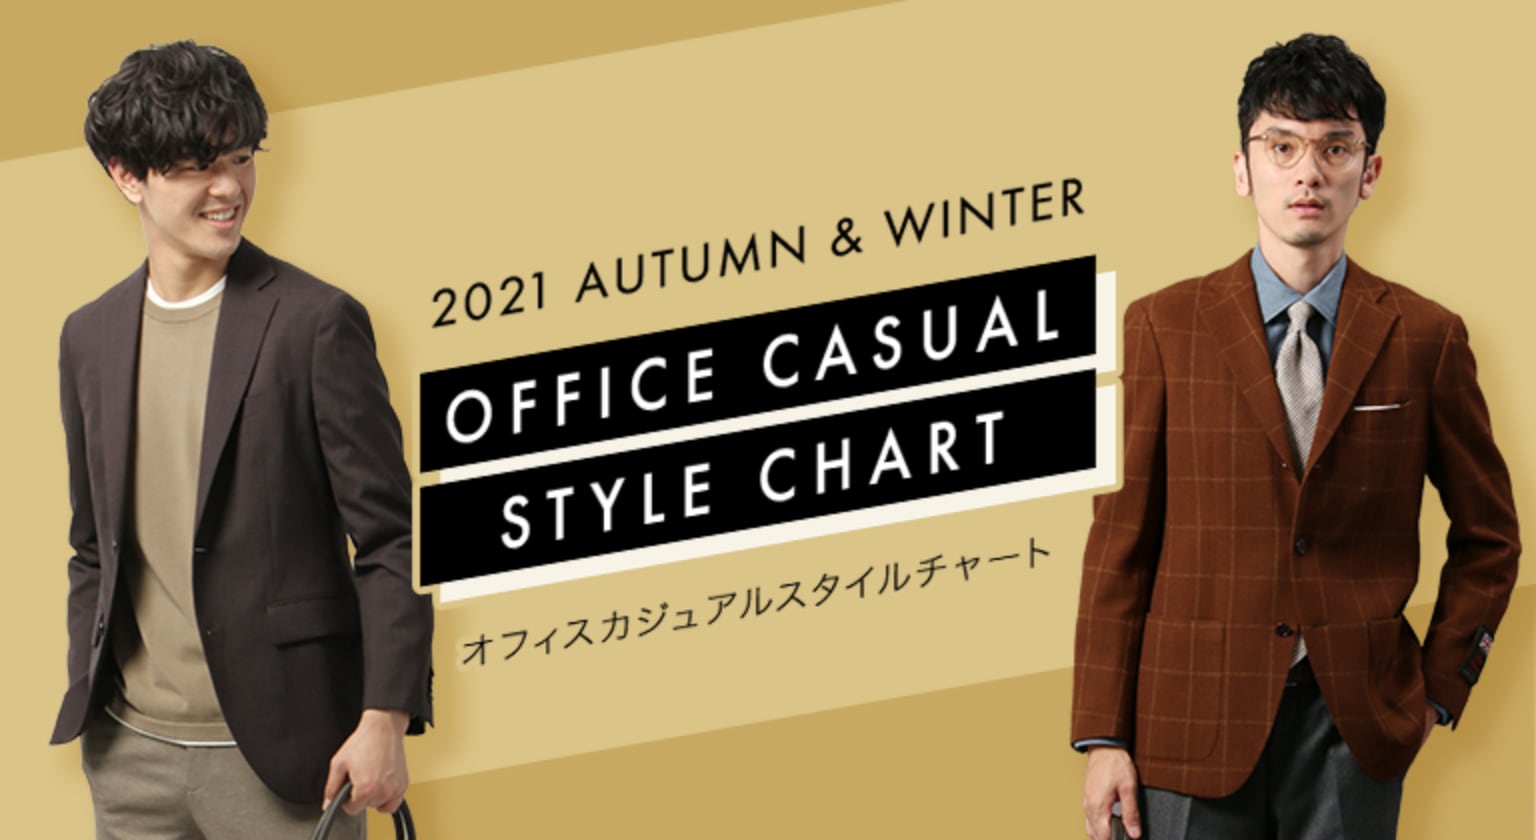 2021 AUTUMN & WINTER OFFICE CASUAL STYLE CHART オフィスカジュアルスタイルチャート